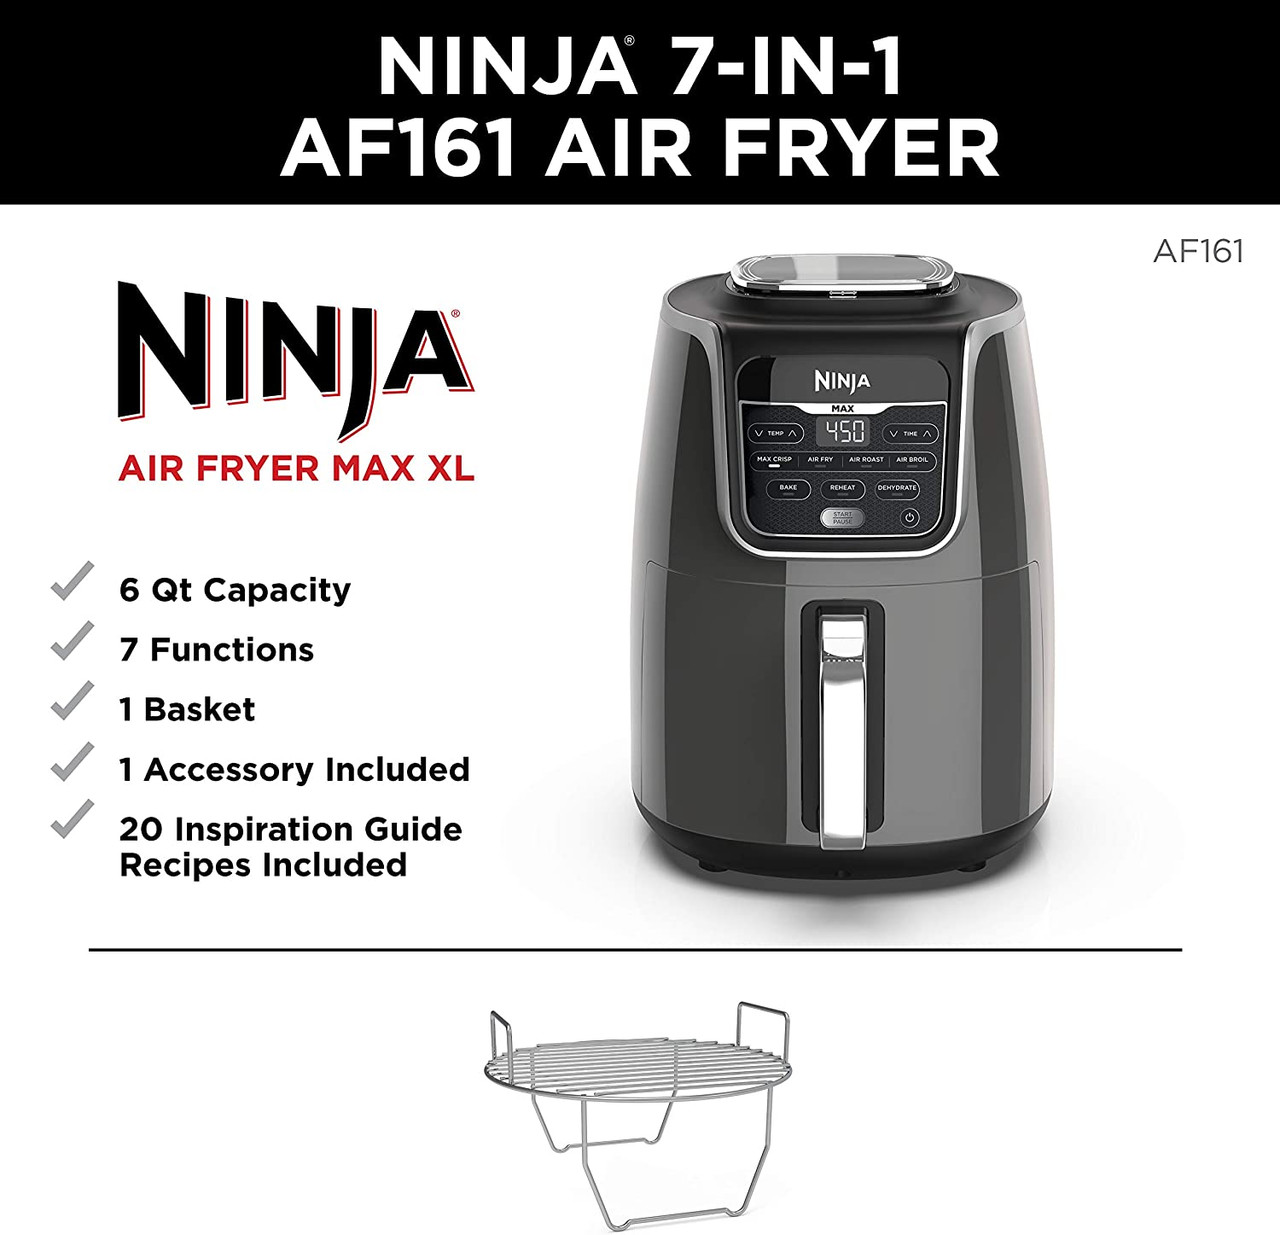 Ninja - Air Fryer Max XL - Grey. Does anyone have similar issue? I